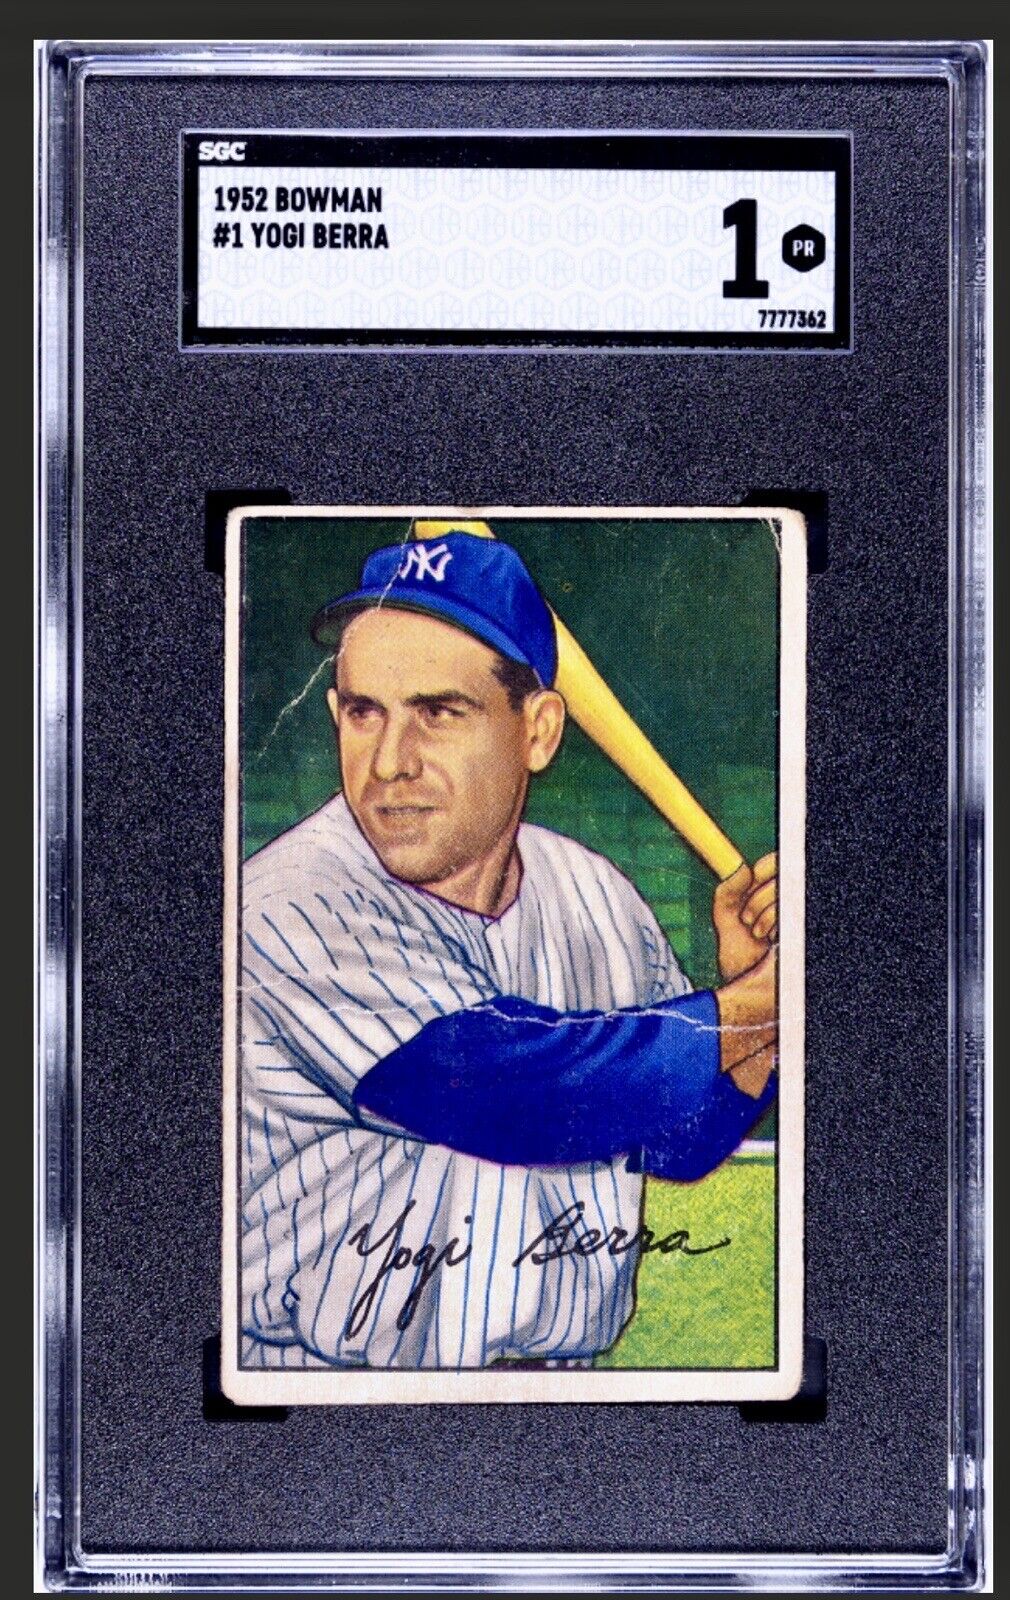 1952 Bowman Yogi Berra #1 New York Yankees HOF SGC 1 PR